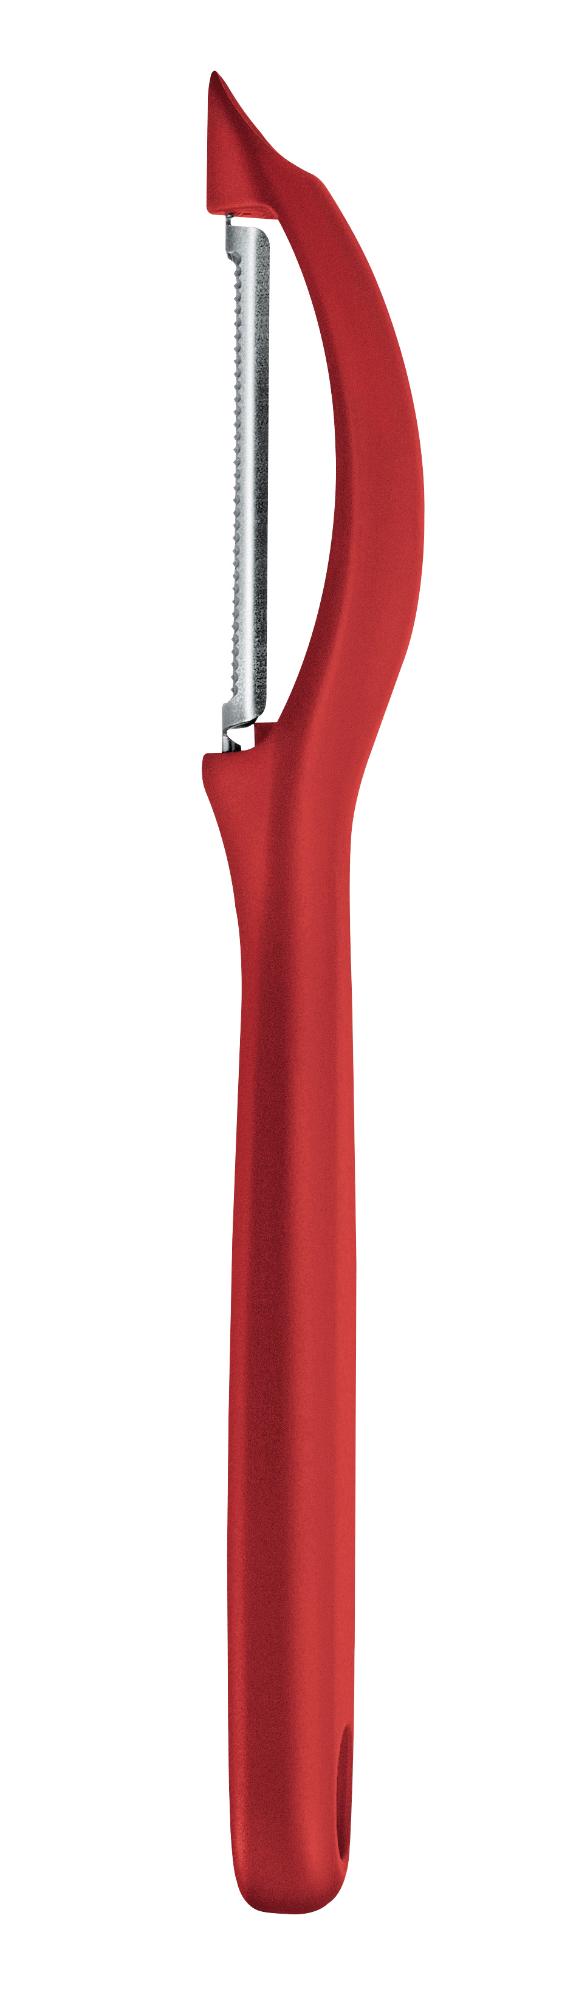 Swiss Classic universal peeler, serrated blade - red